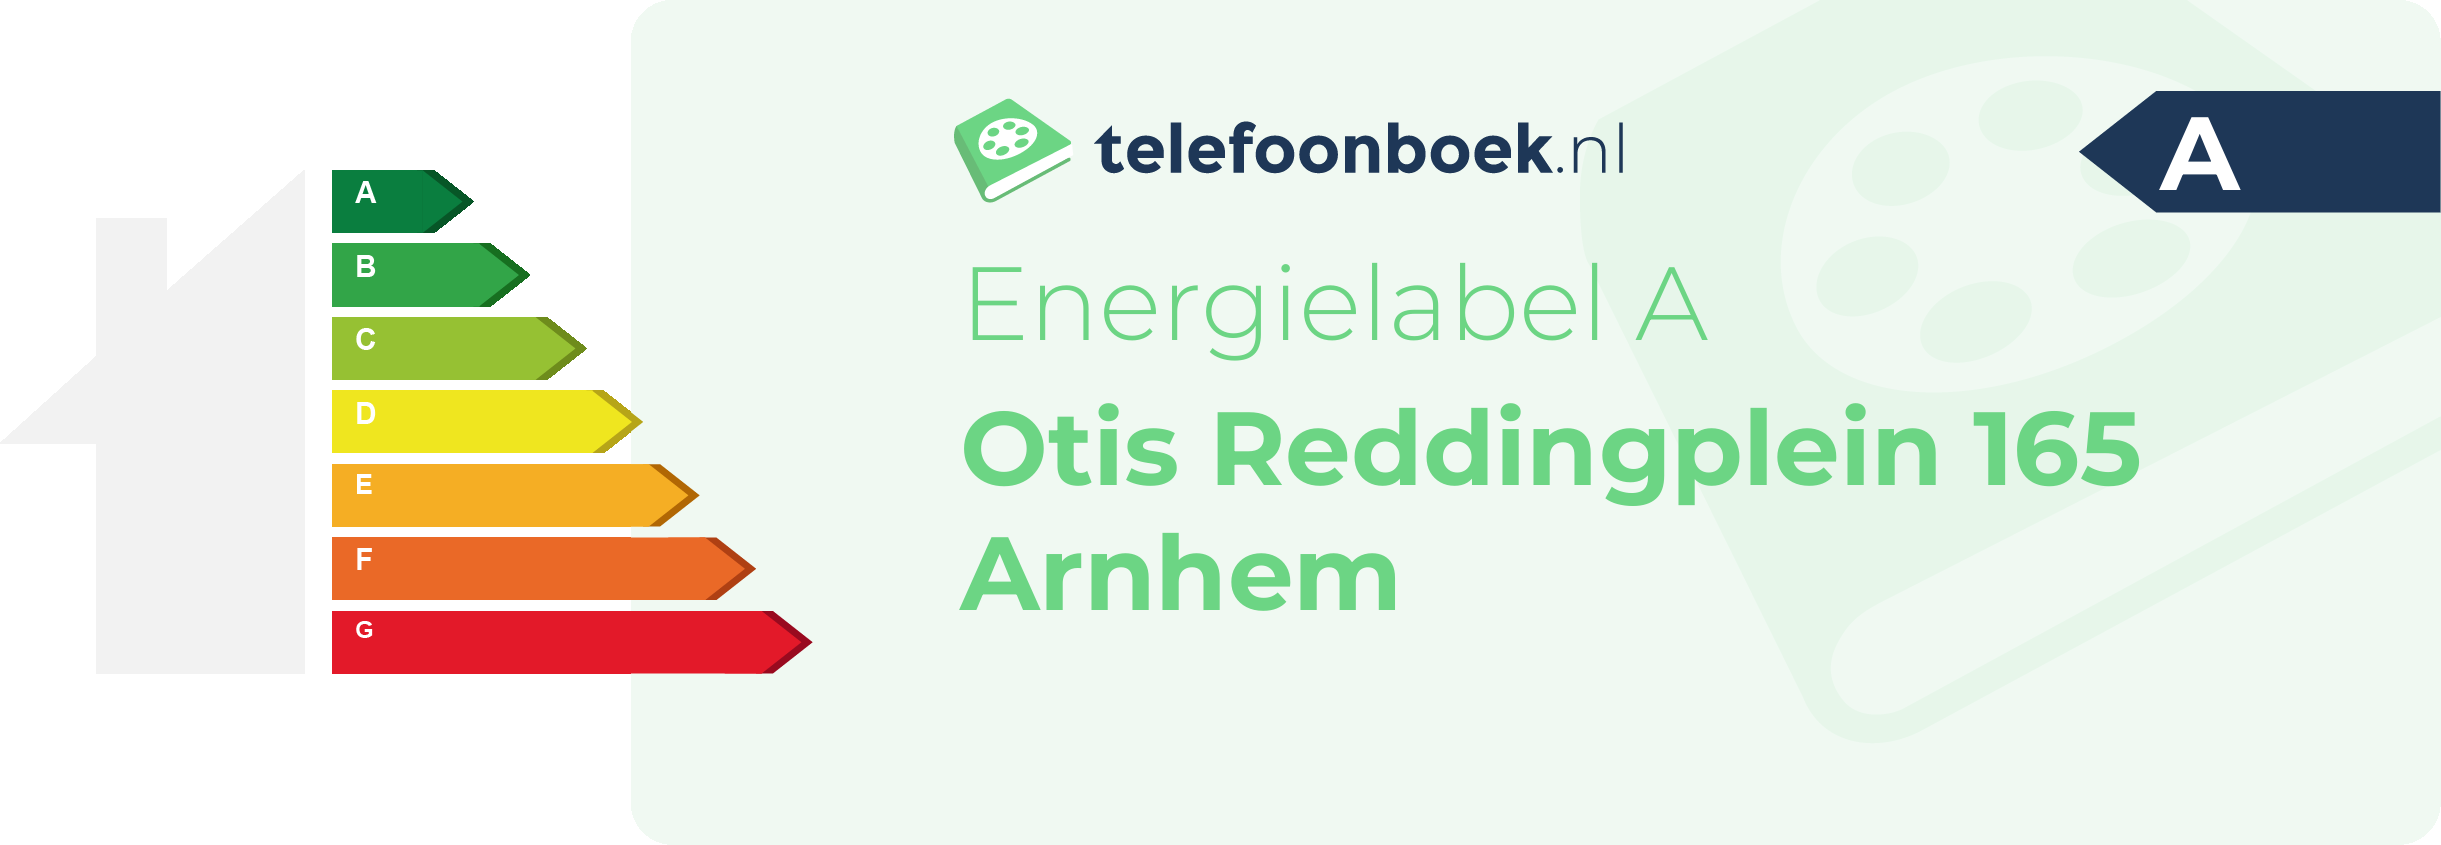 Energielabel Otis Reddingplein 165 Arnhem